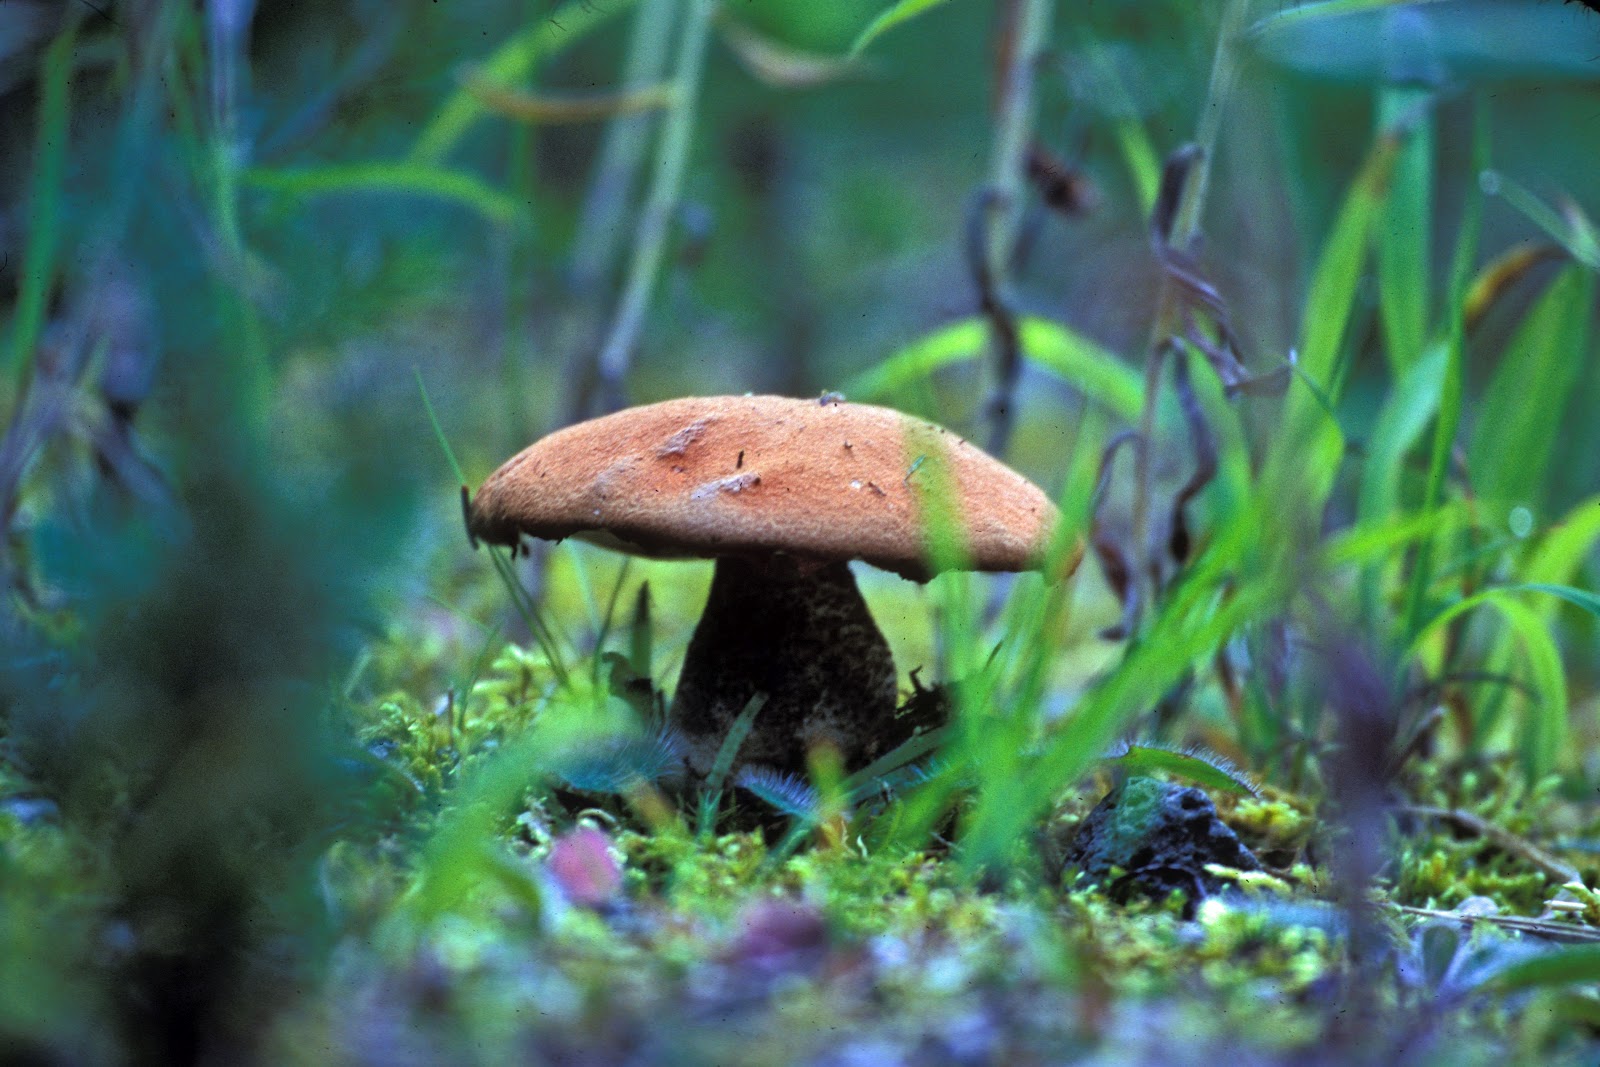 The Azure Gate Mushrooms